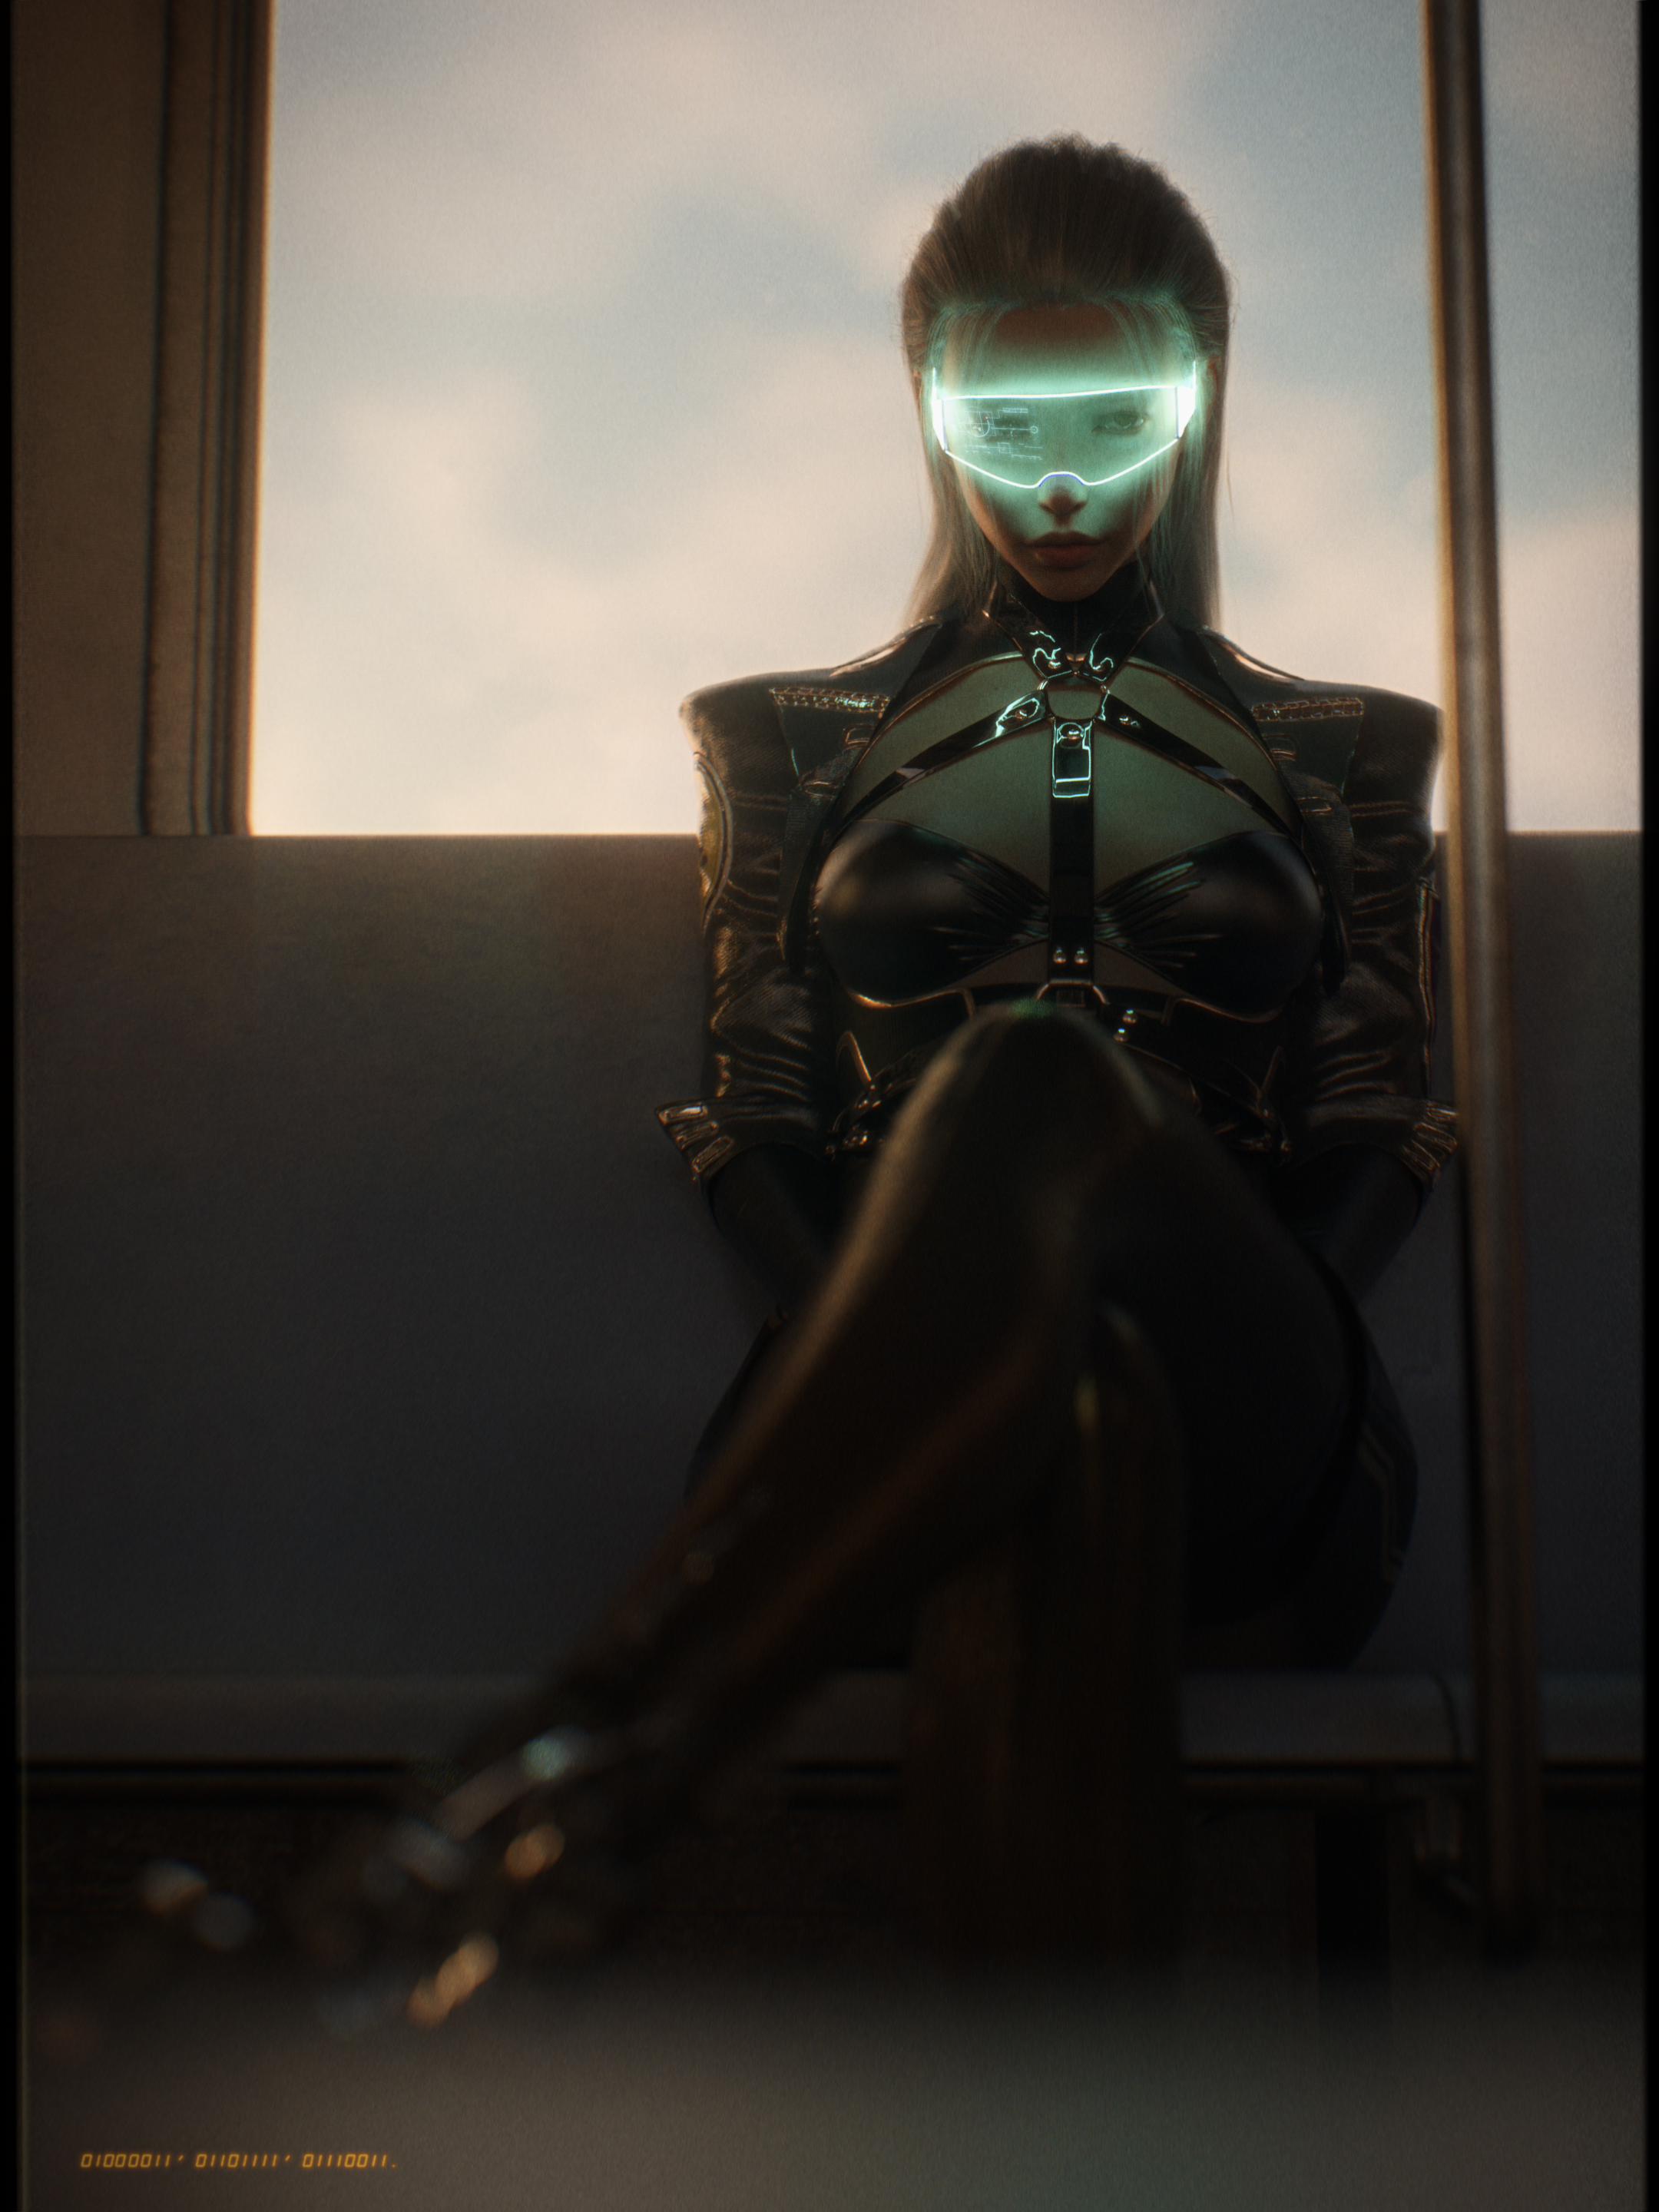 General 2160x2880 digital art artwork illustration women sitting cyberpunk legs crossed body harness portrait display